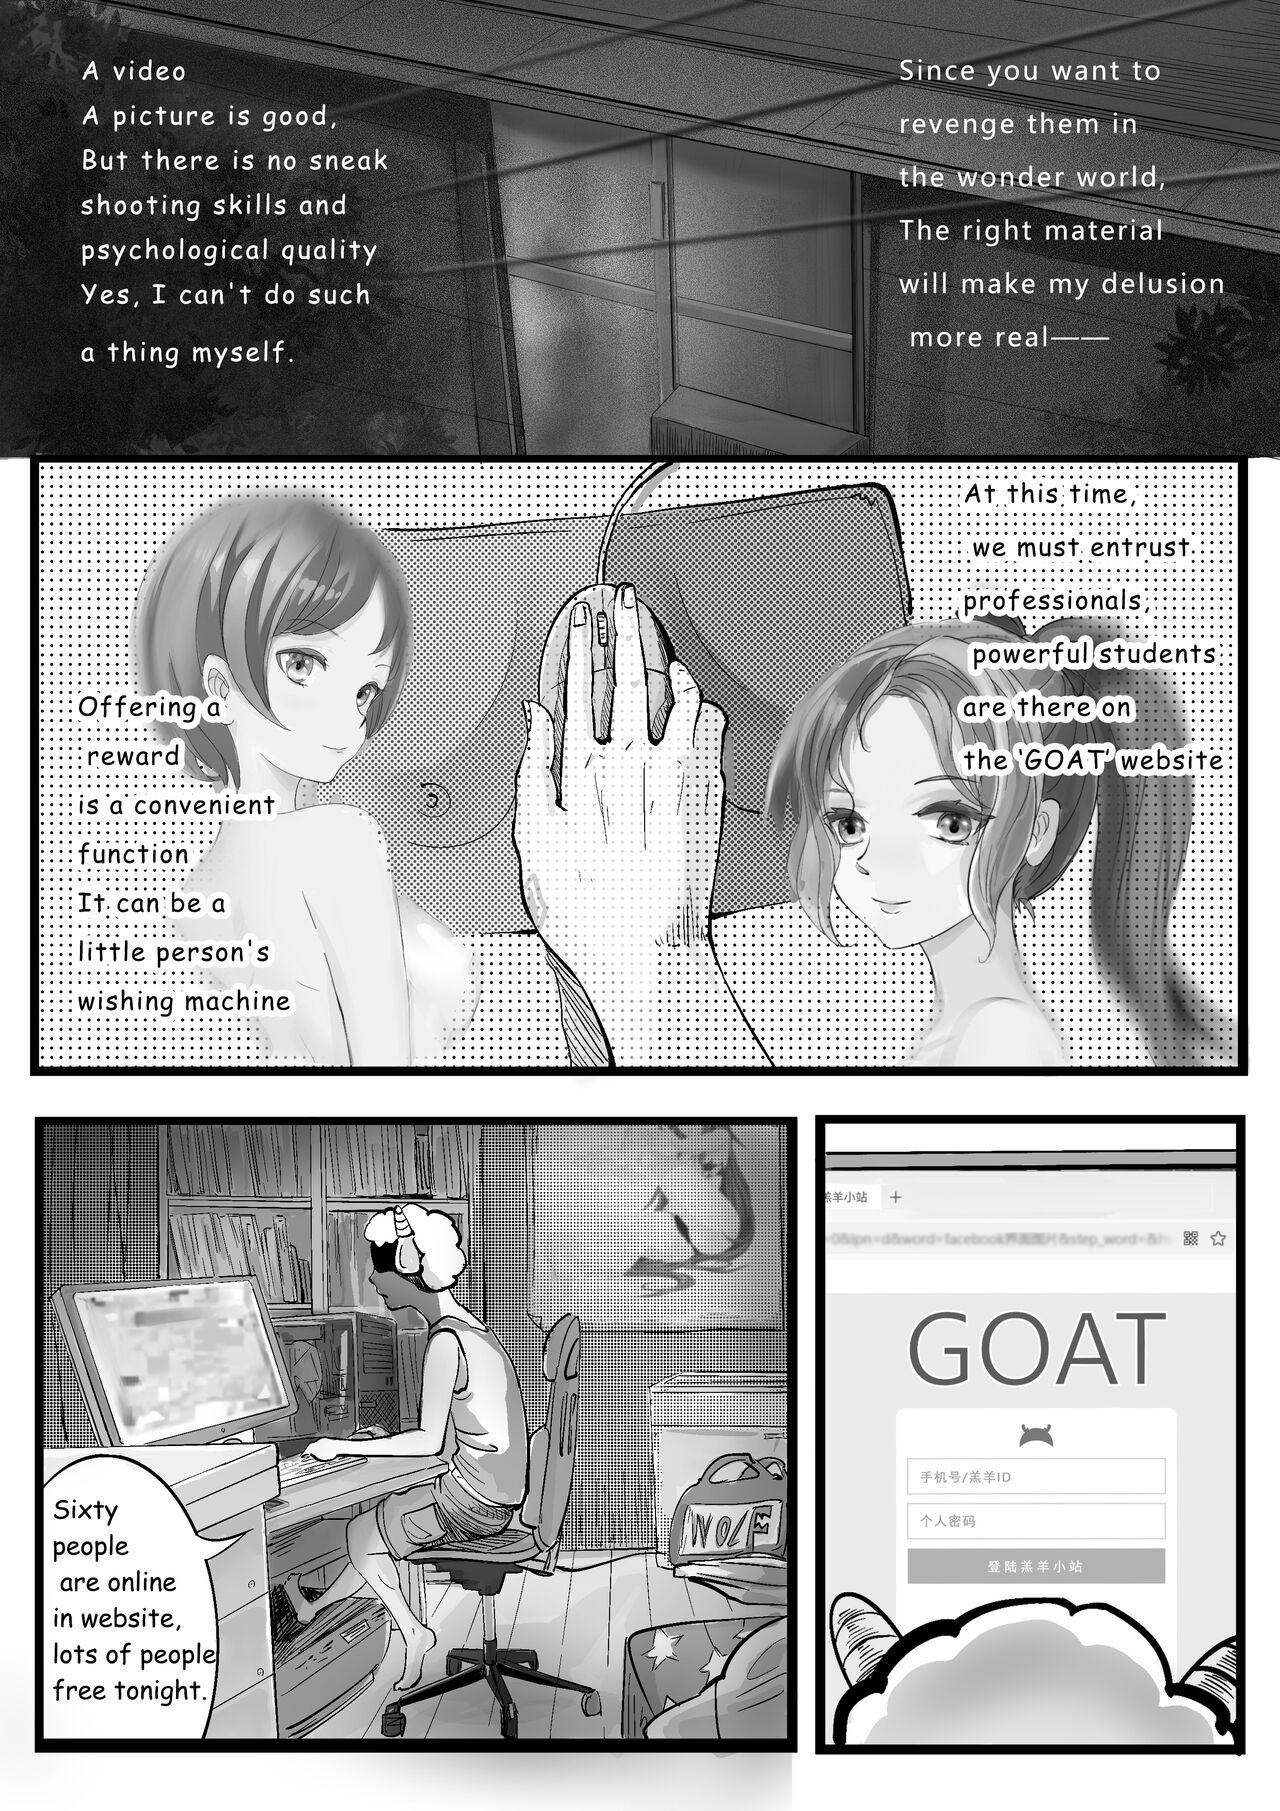 GOAT-goat chapter 2 4